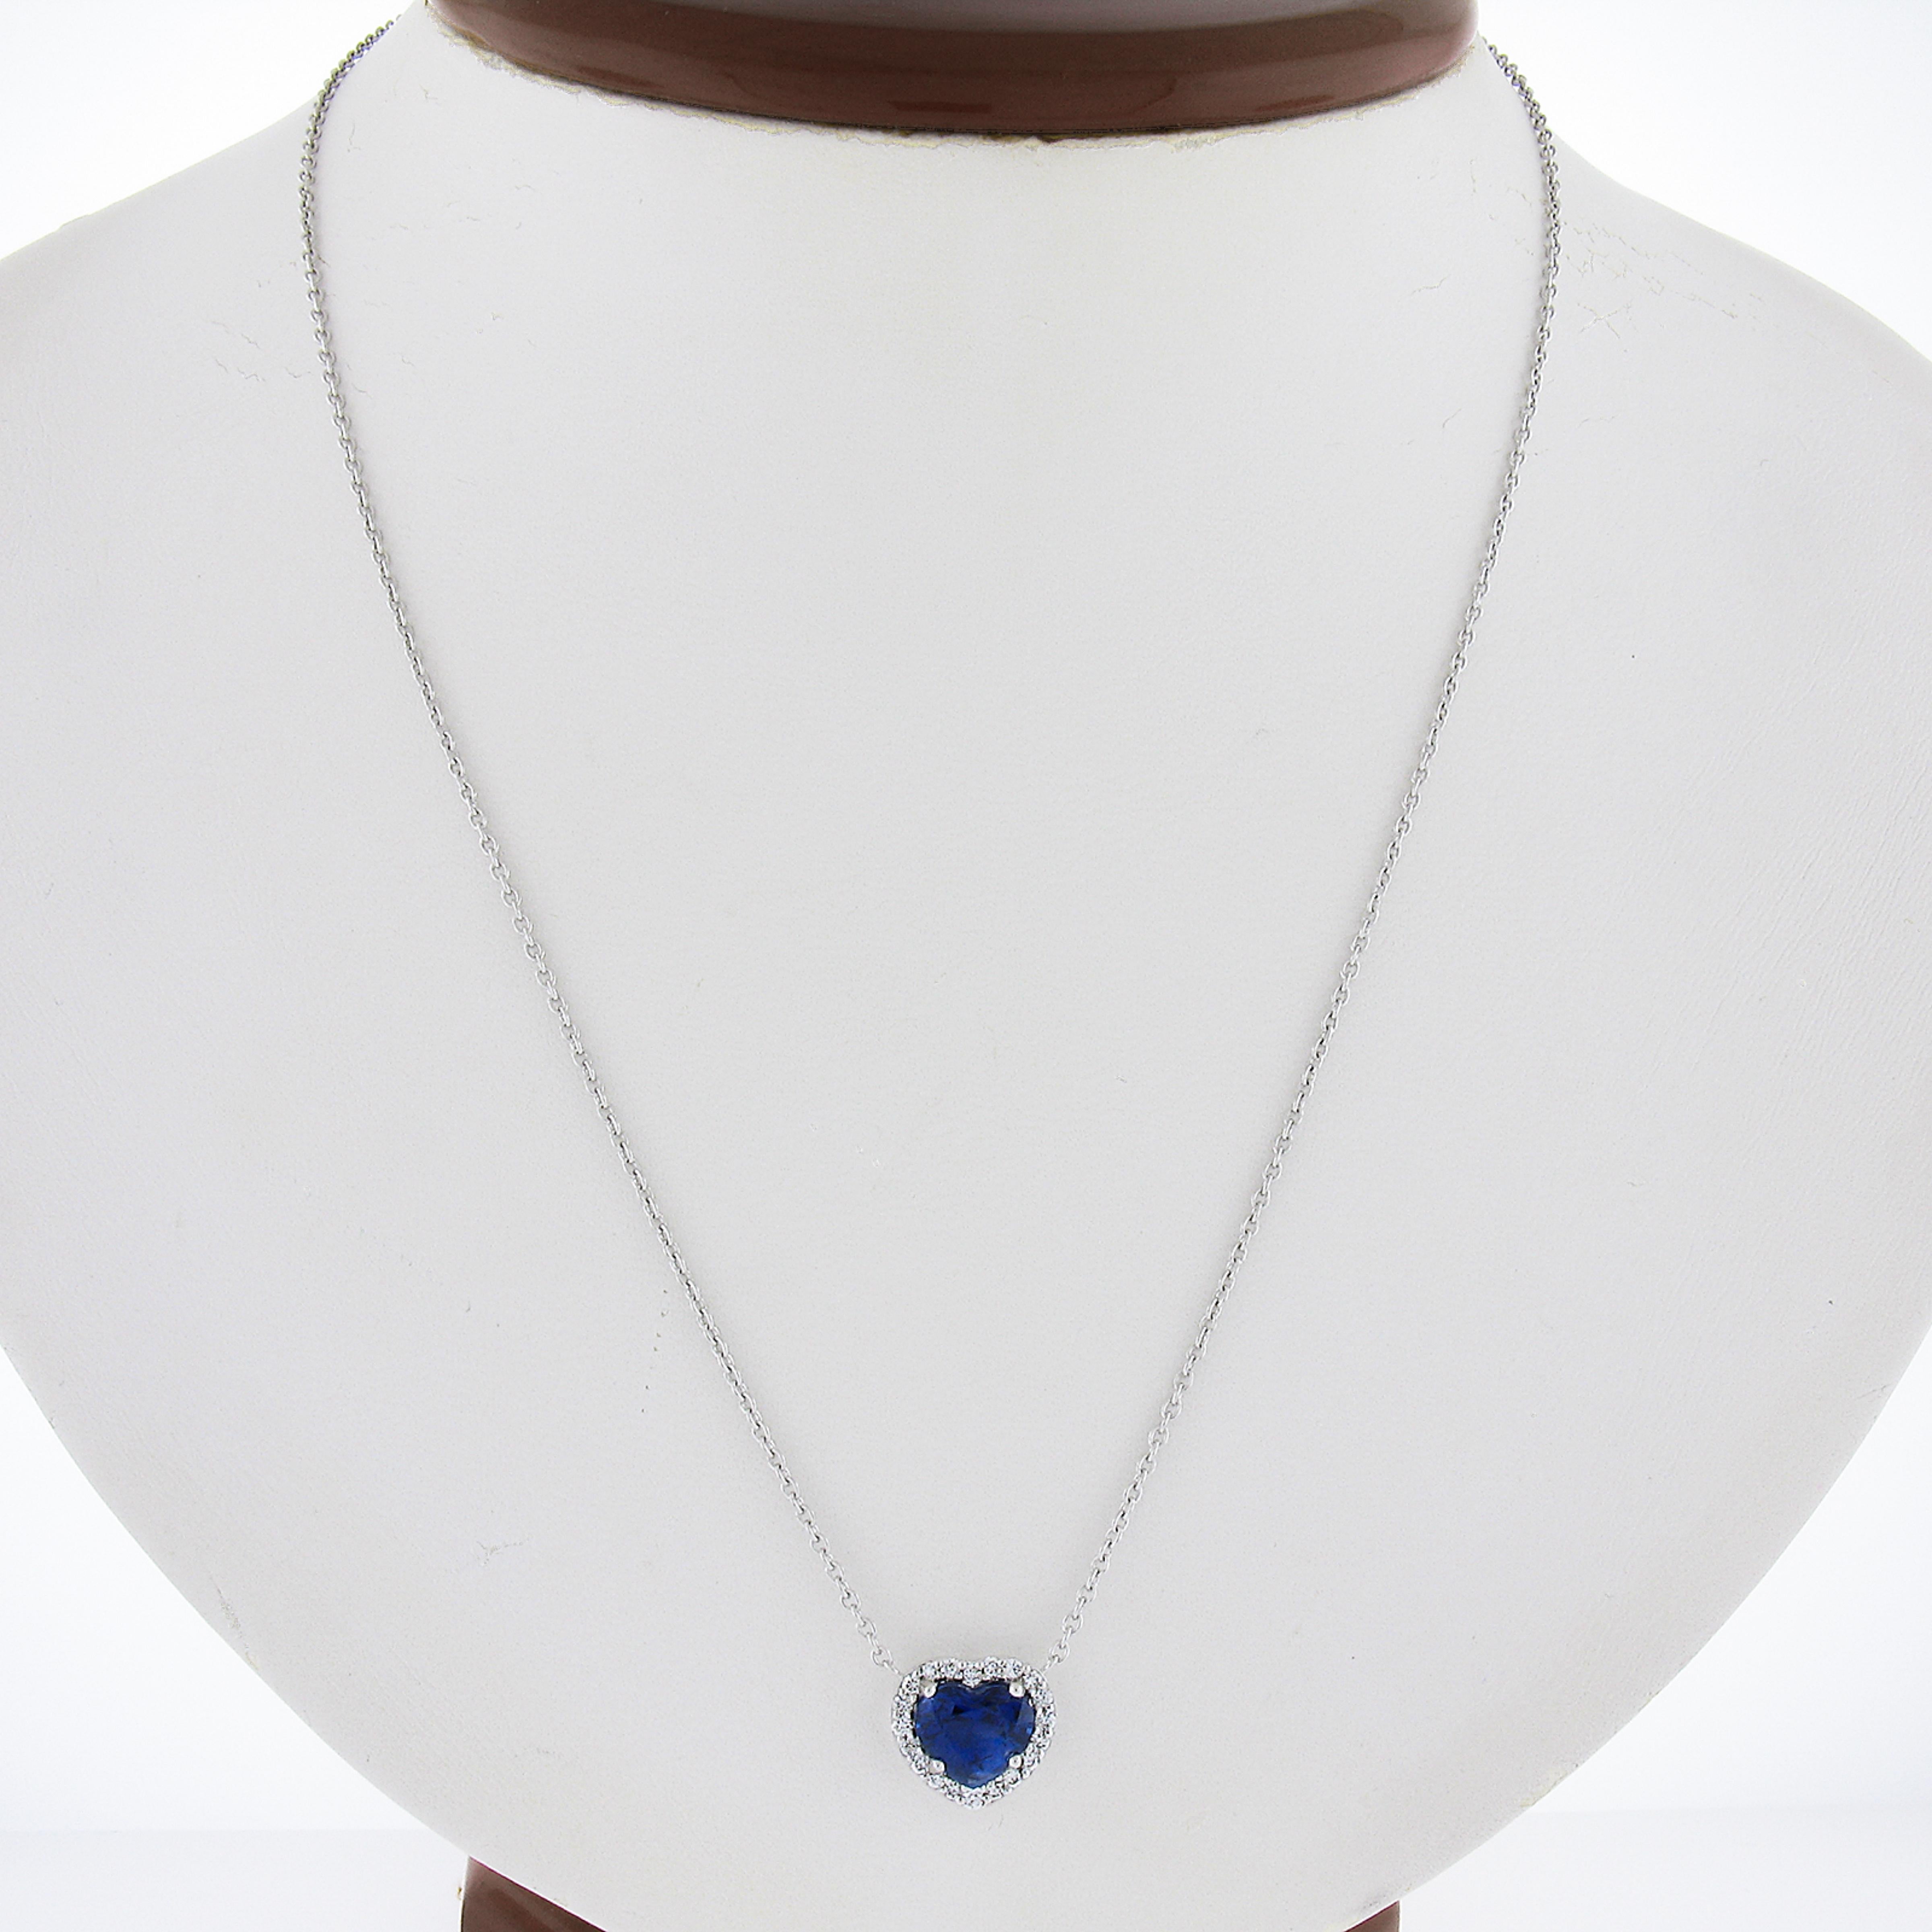 --Stone(s):--
(1) Natural Genuine Sapphire - Heart Brilliant Cut - Prong Set - Very Fine Rich Blue Color - 2.06ct (exact)
(20) Natural Genuine Diamonds - Round Brilliant Cut - Prong Set - F/G Color - VS1/VS2 Clarity - 0.21ctw (exact)
Total Carat